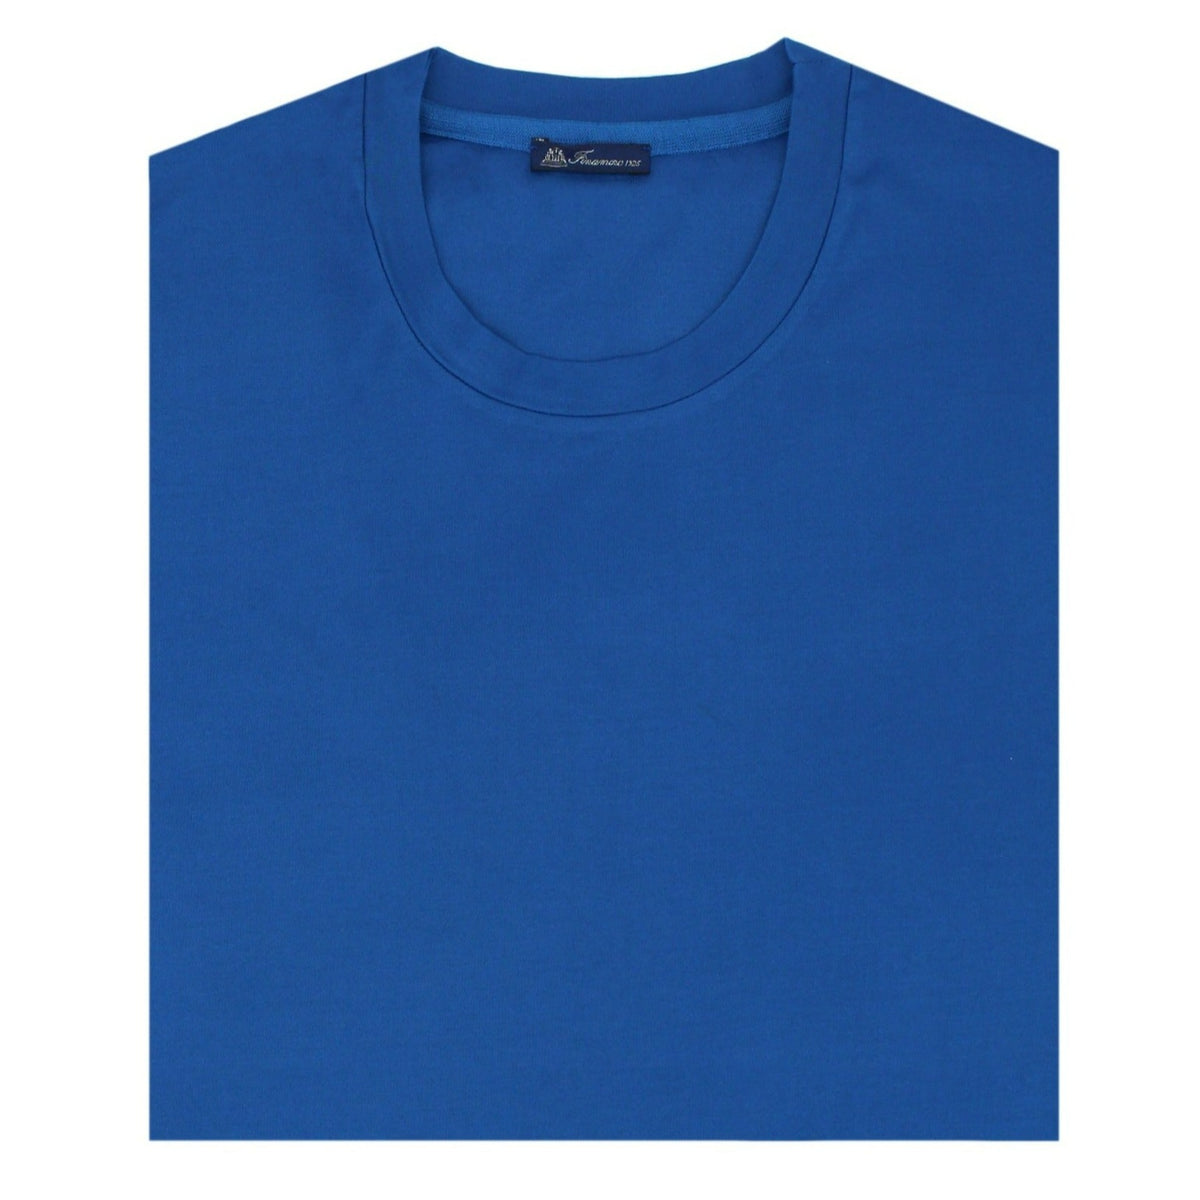 Blue Royal garment dyed Supima cotton t-shirt